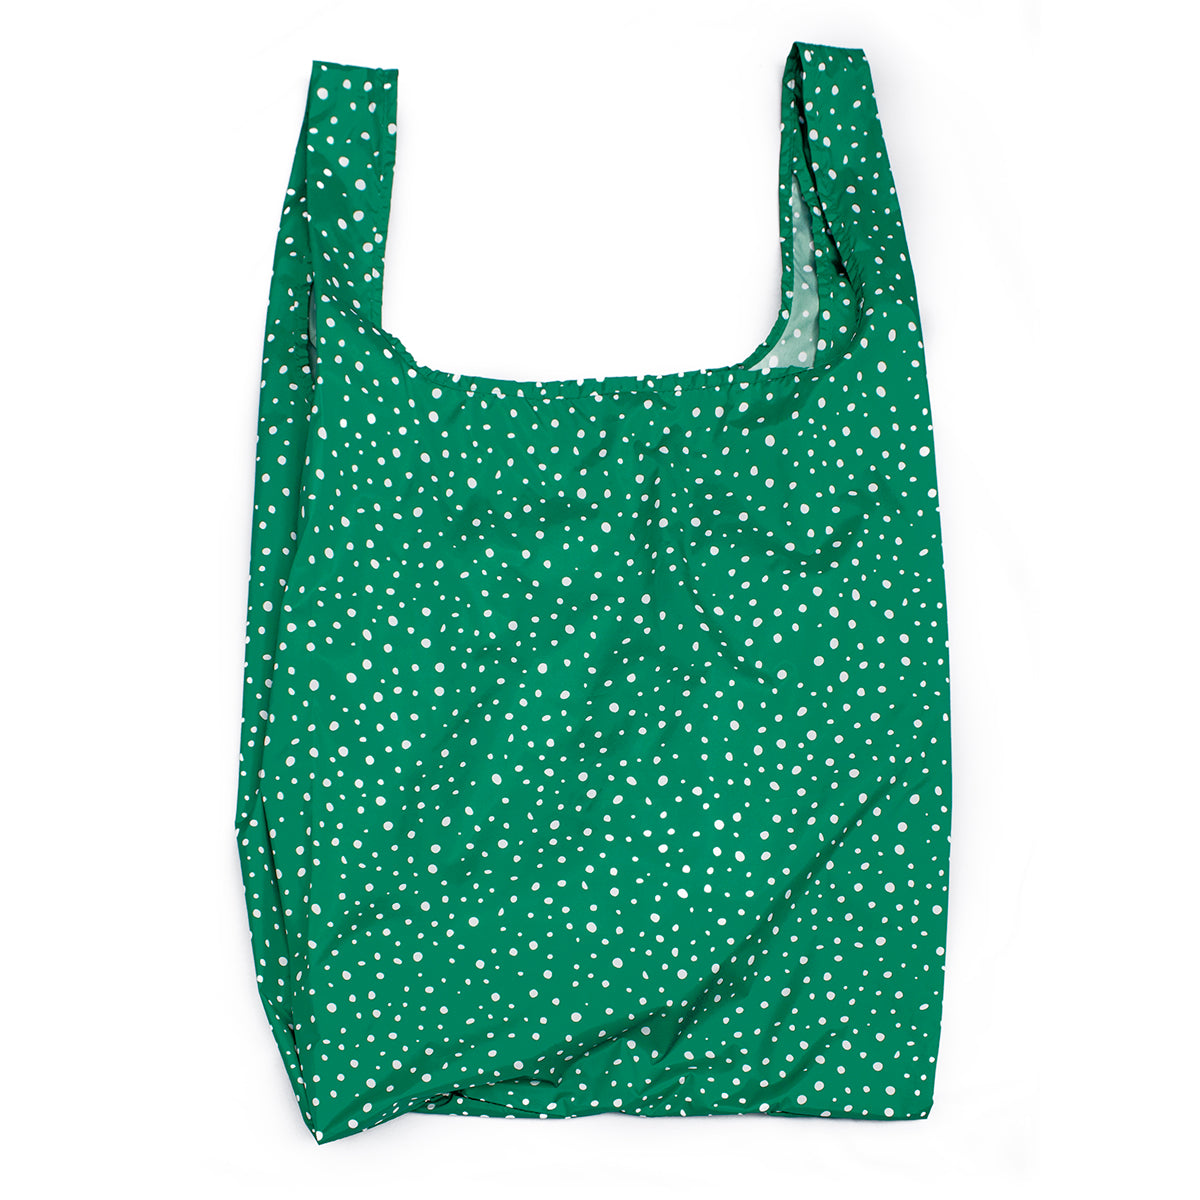 Reusable Bag Large Polka Dots Green